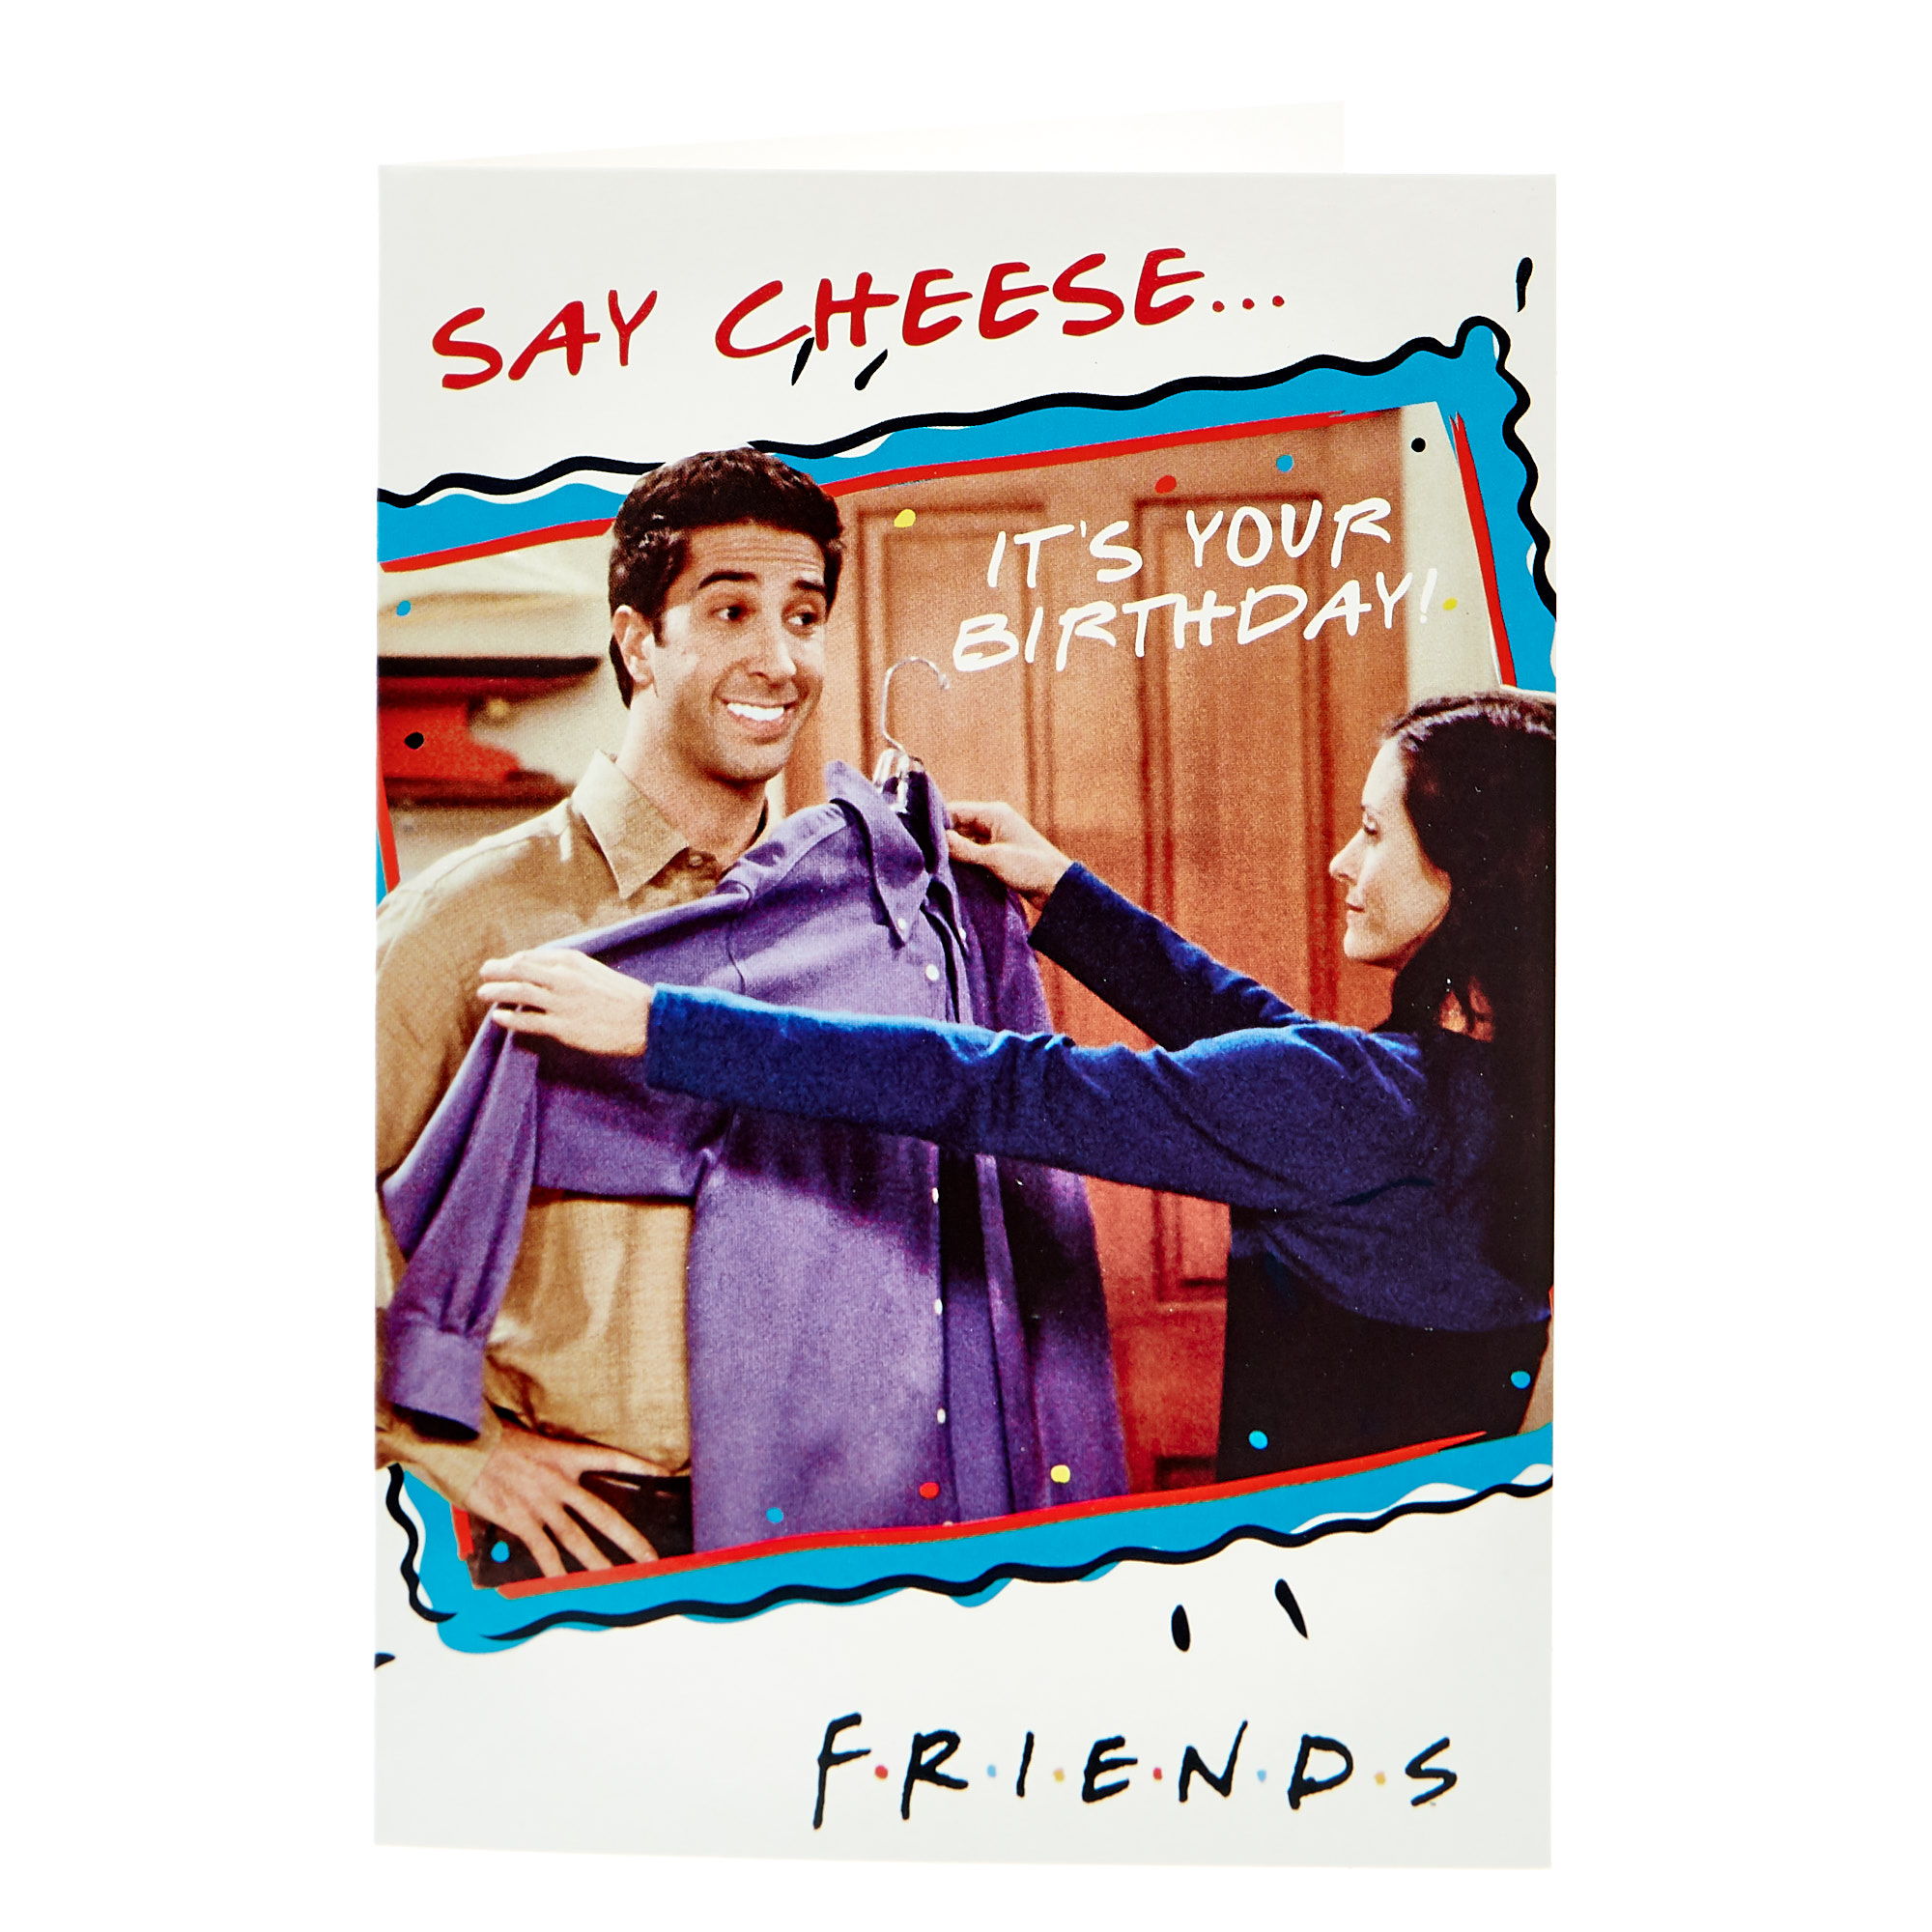 F.R.I.E.N.D.S Birthday Card - Say Cheese